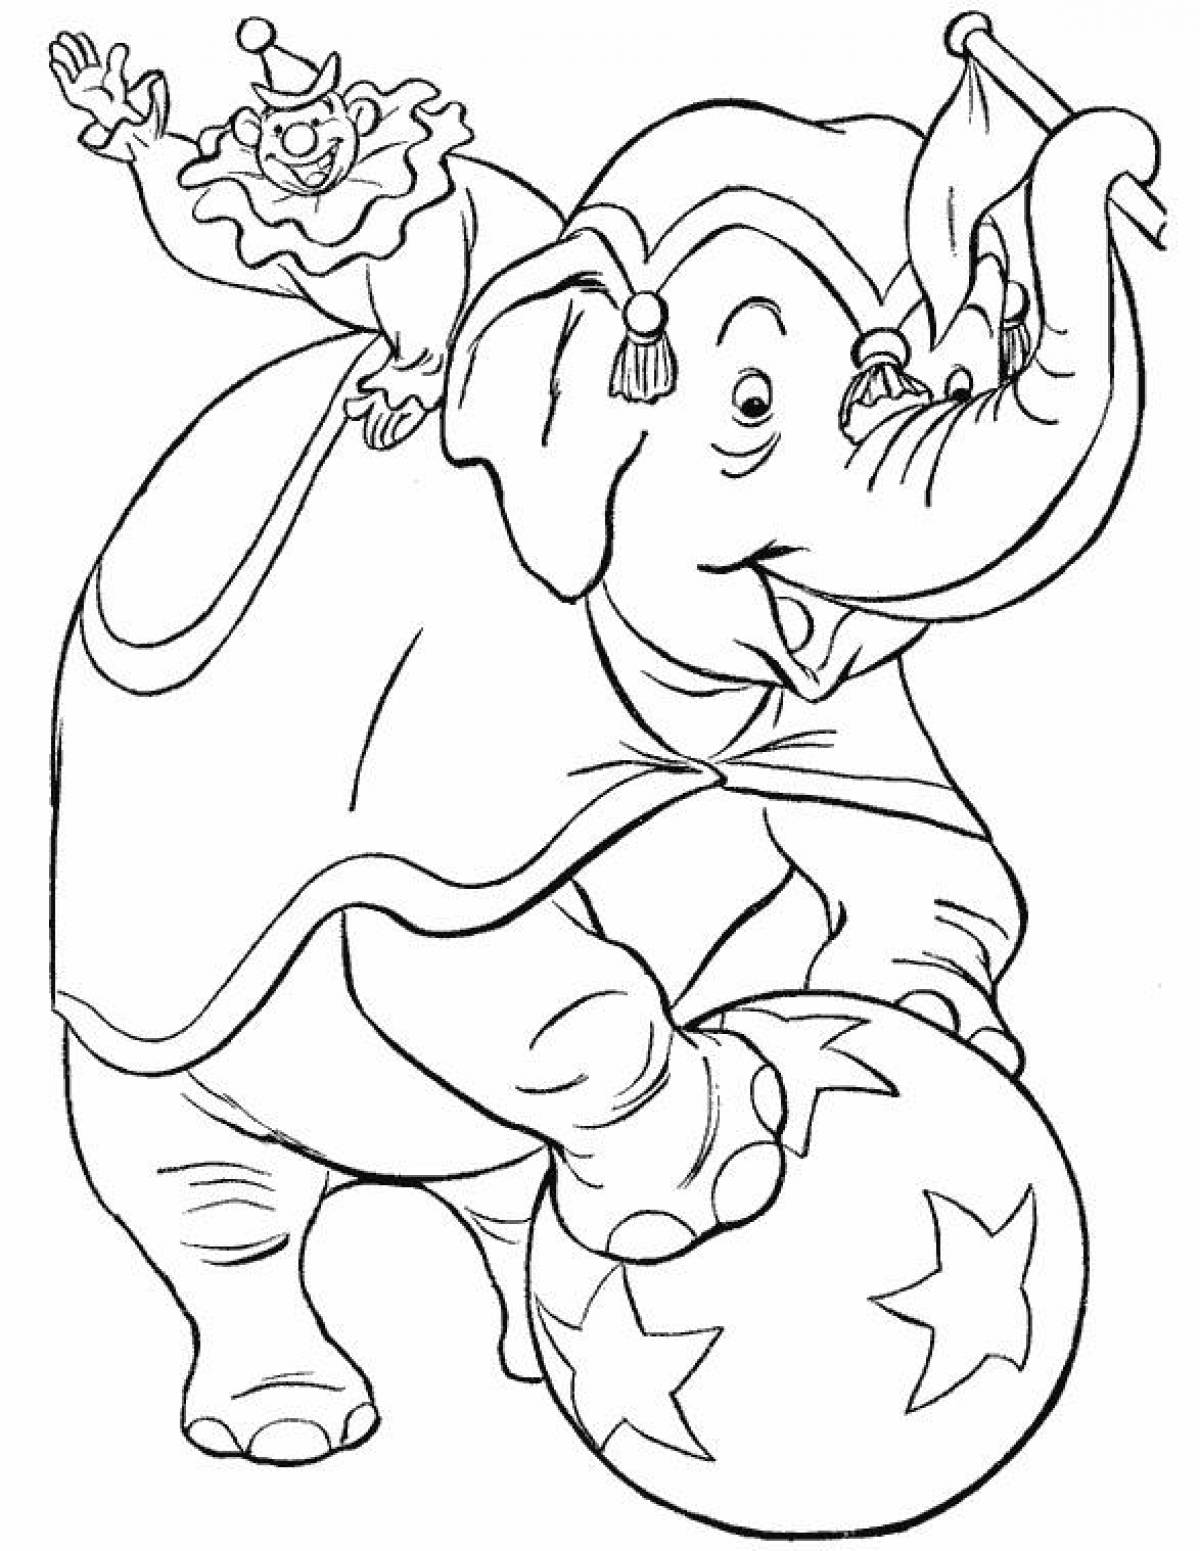 Clown with elephant